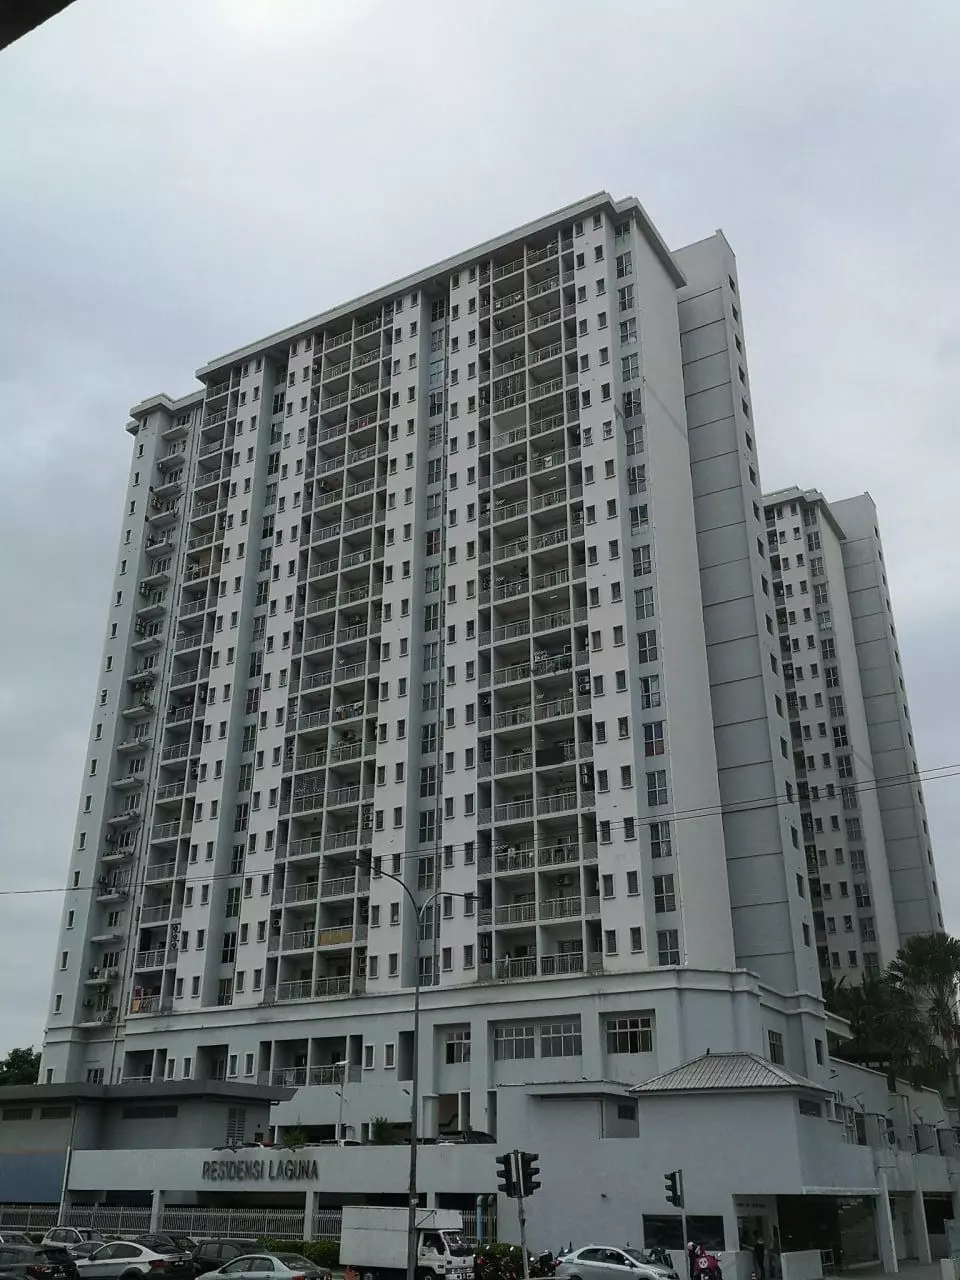 Rumah Lelong Sunway Belvedere (Residensi Laguna) @ Bandar Sunway, Petaling Jaya, Selangor for Auction